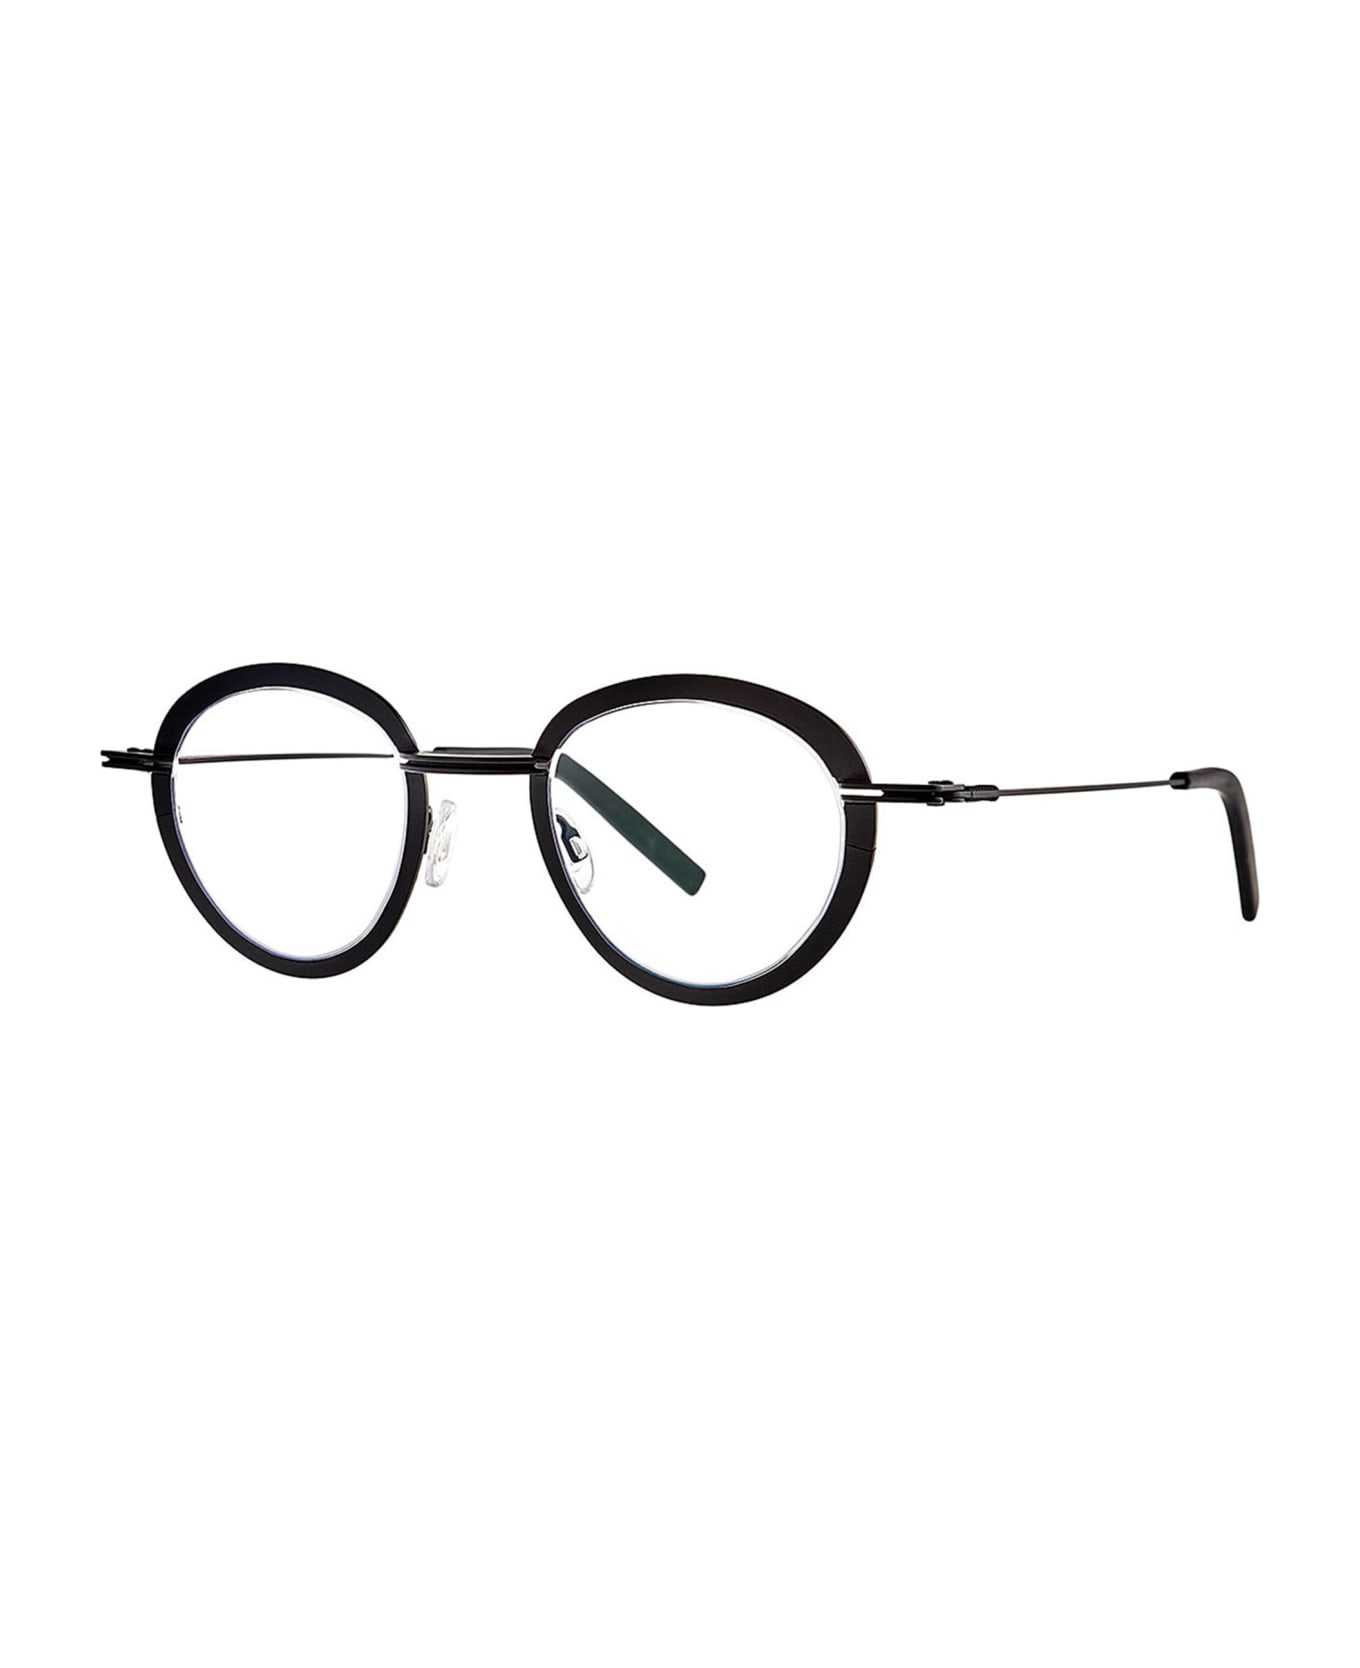 Theo Eyewear Sensational - 005 Rx Glasses - black matte アイウェア